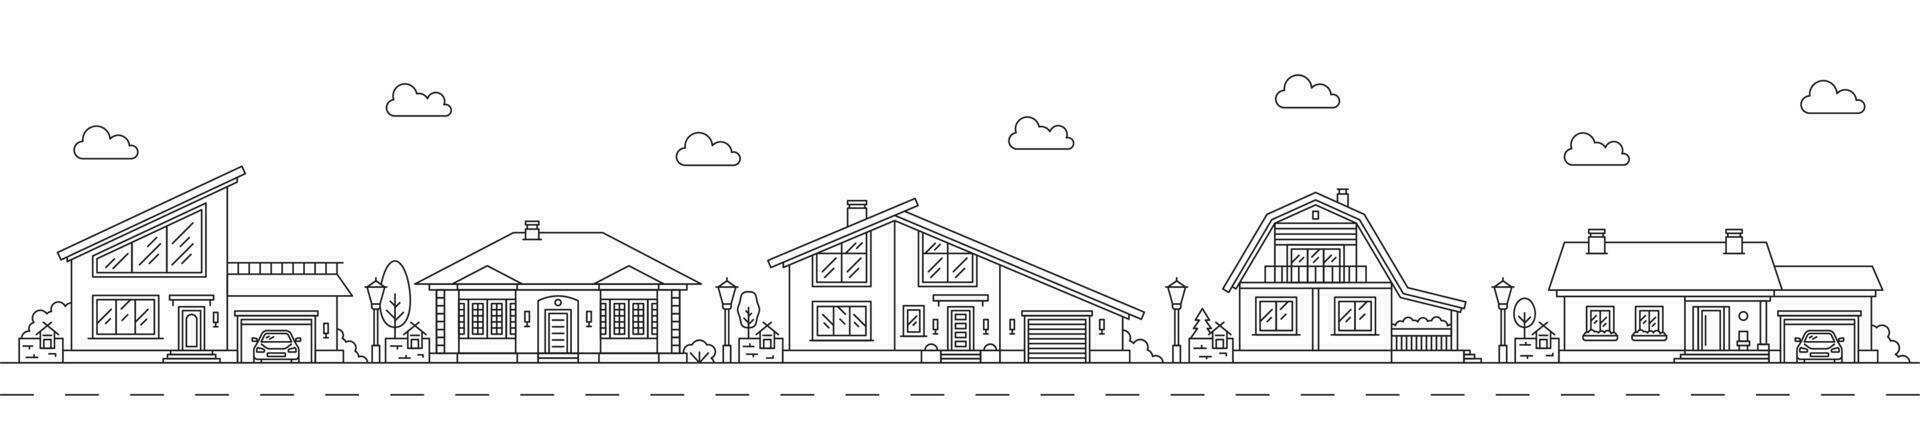 Neighborhood houses buildings line concept vector